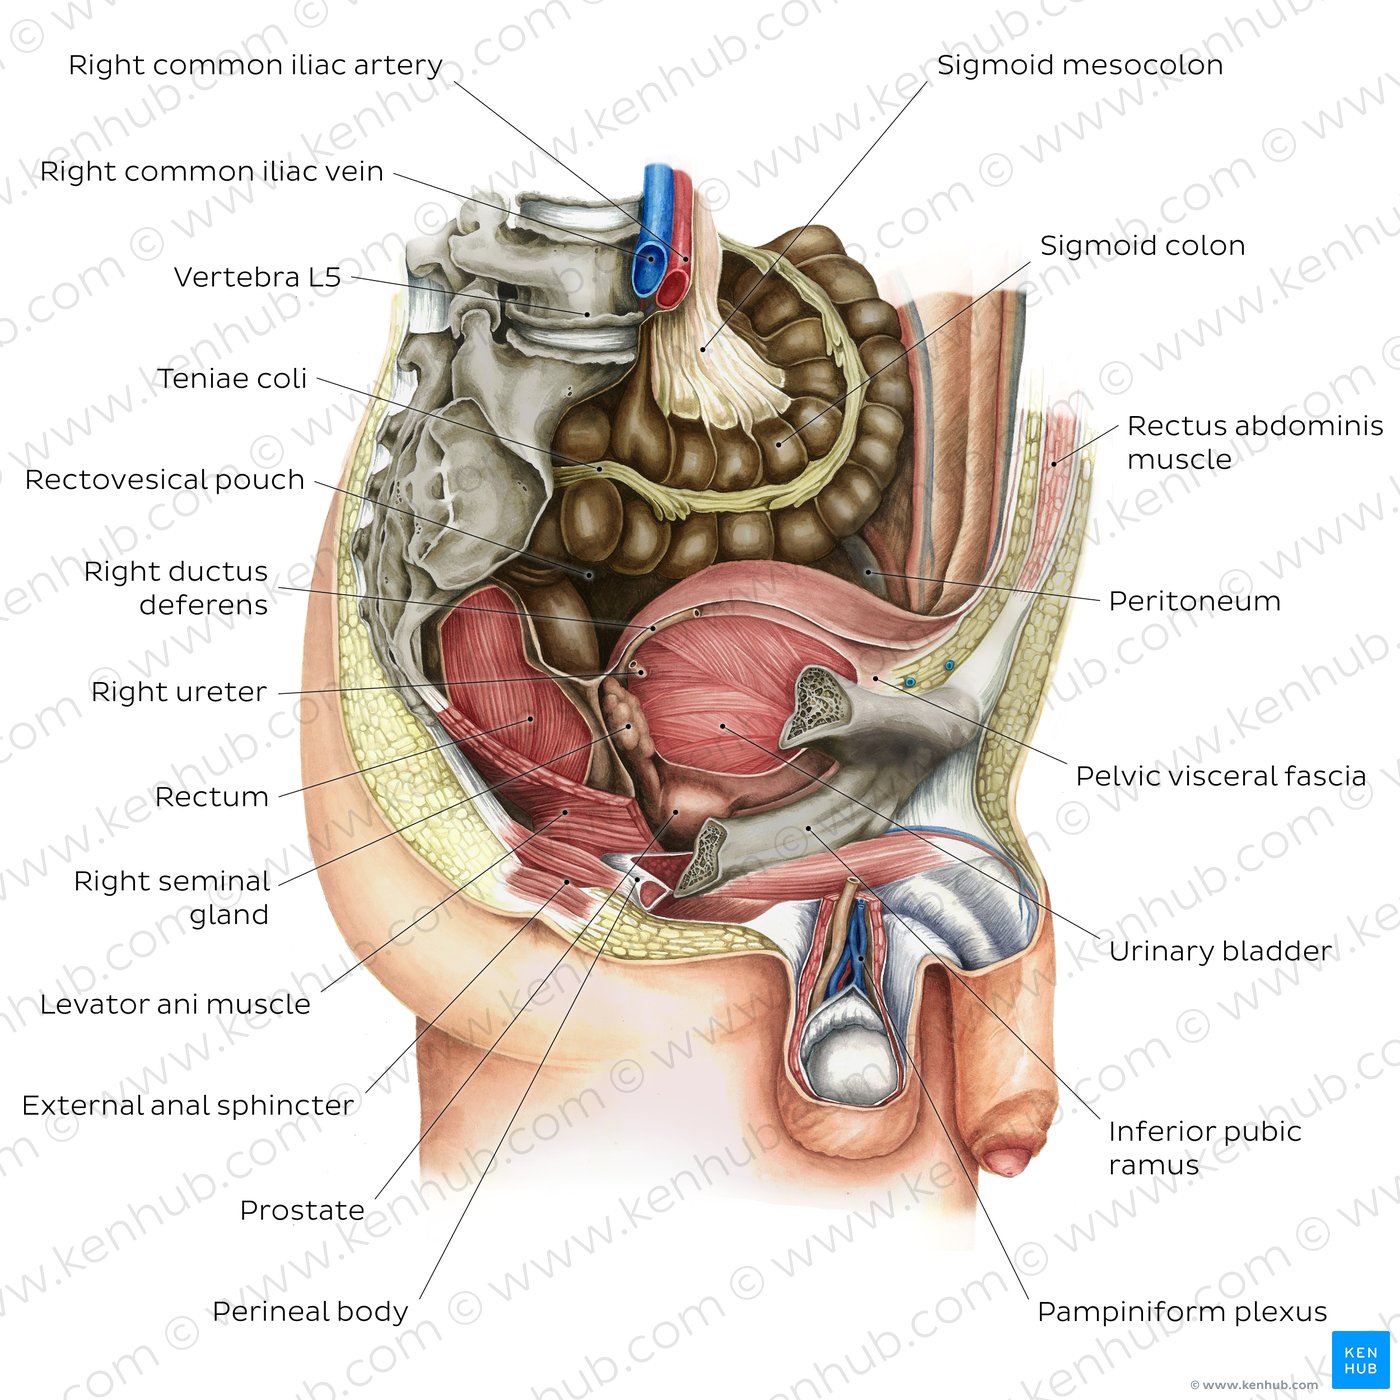 Male pelvic viscera and perineum